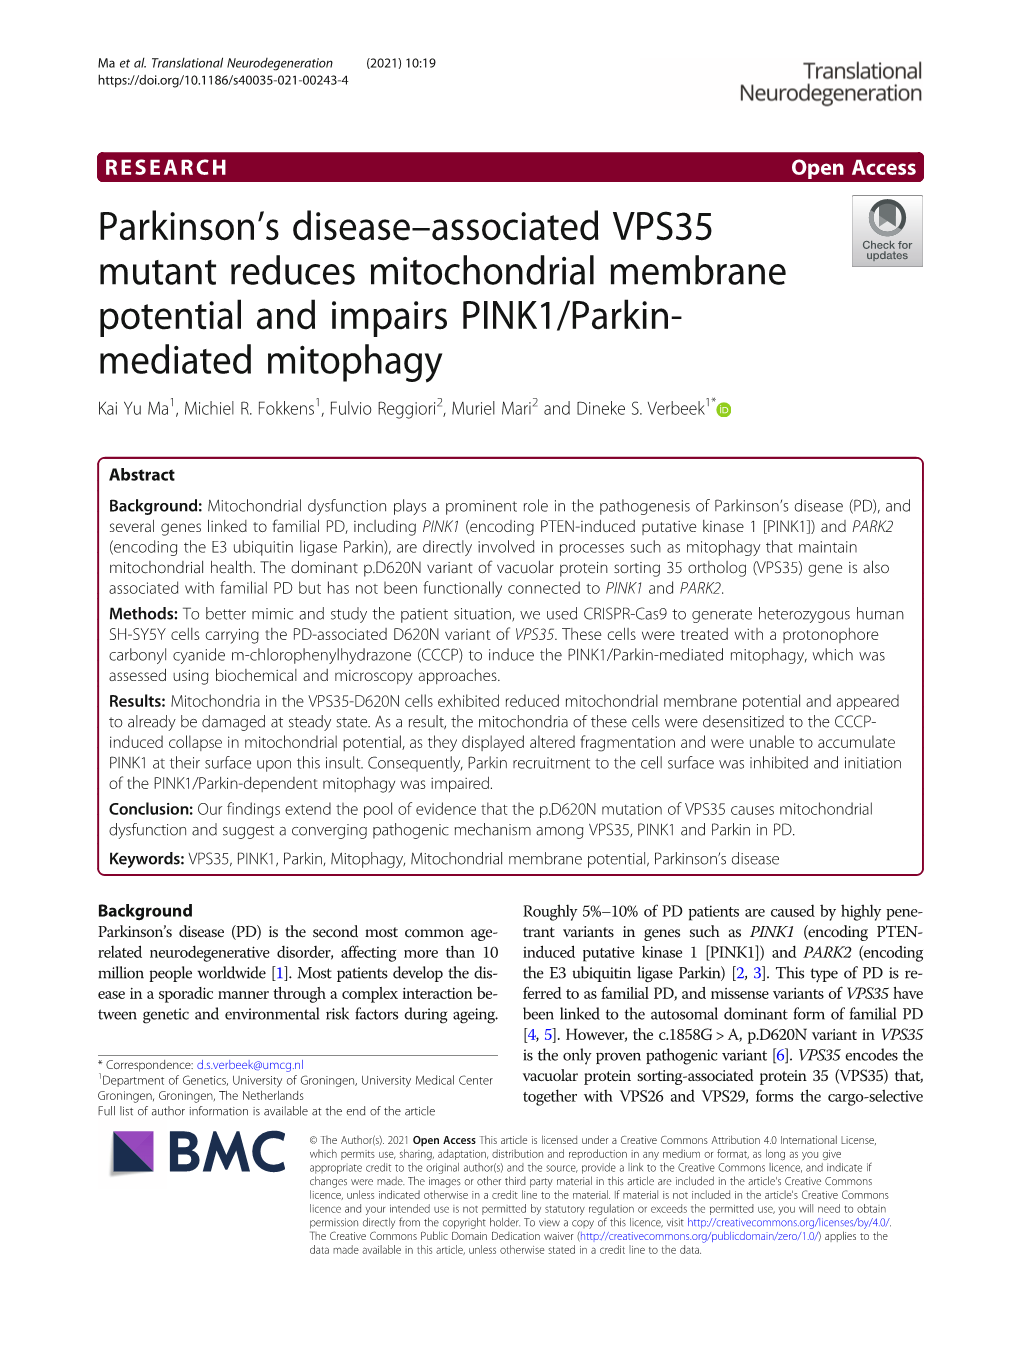 Parkinson's Disease–Associated VPS35 Mutant Reduces